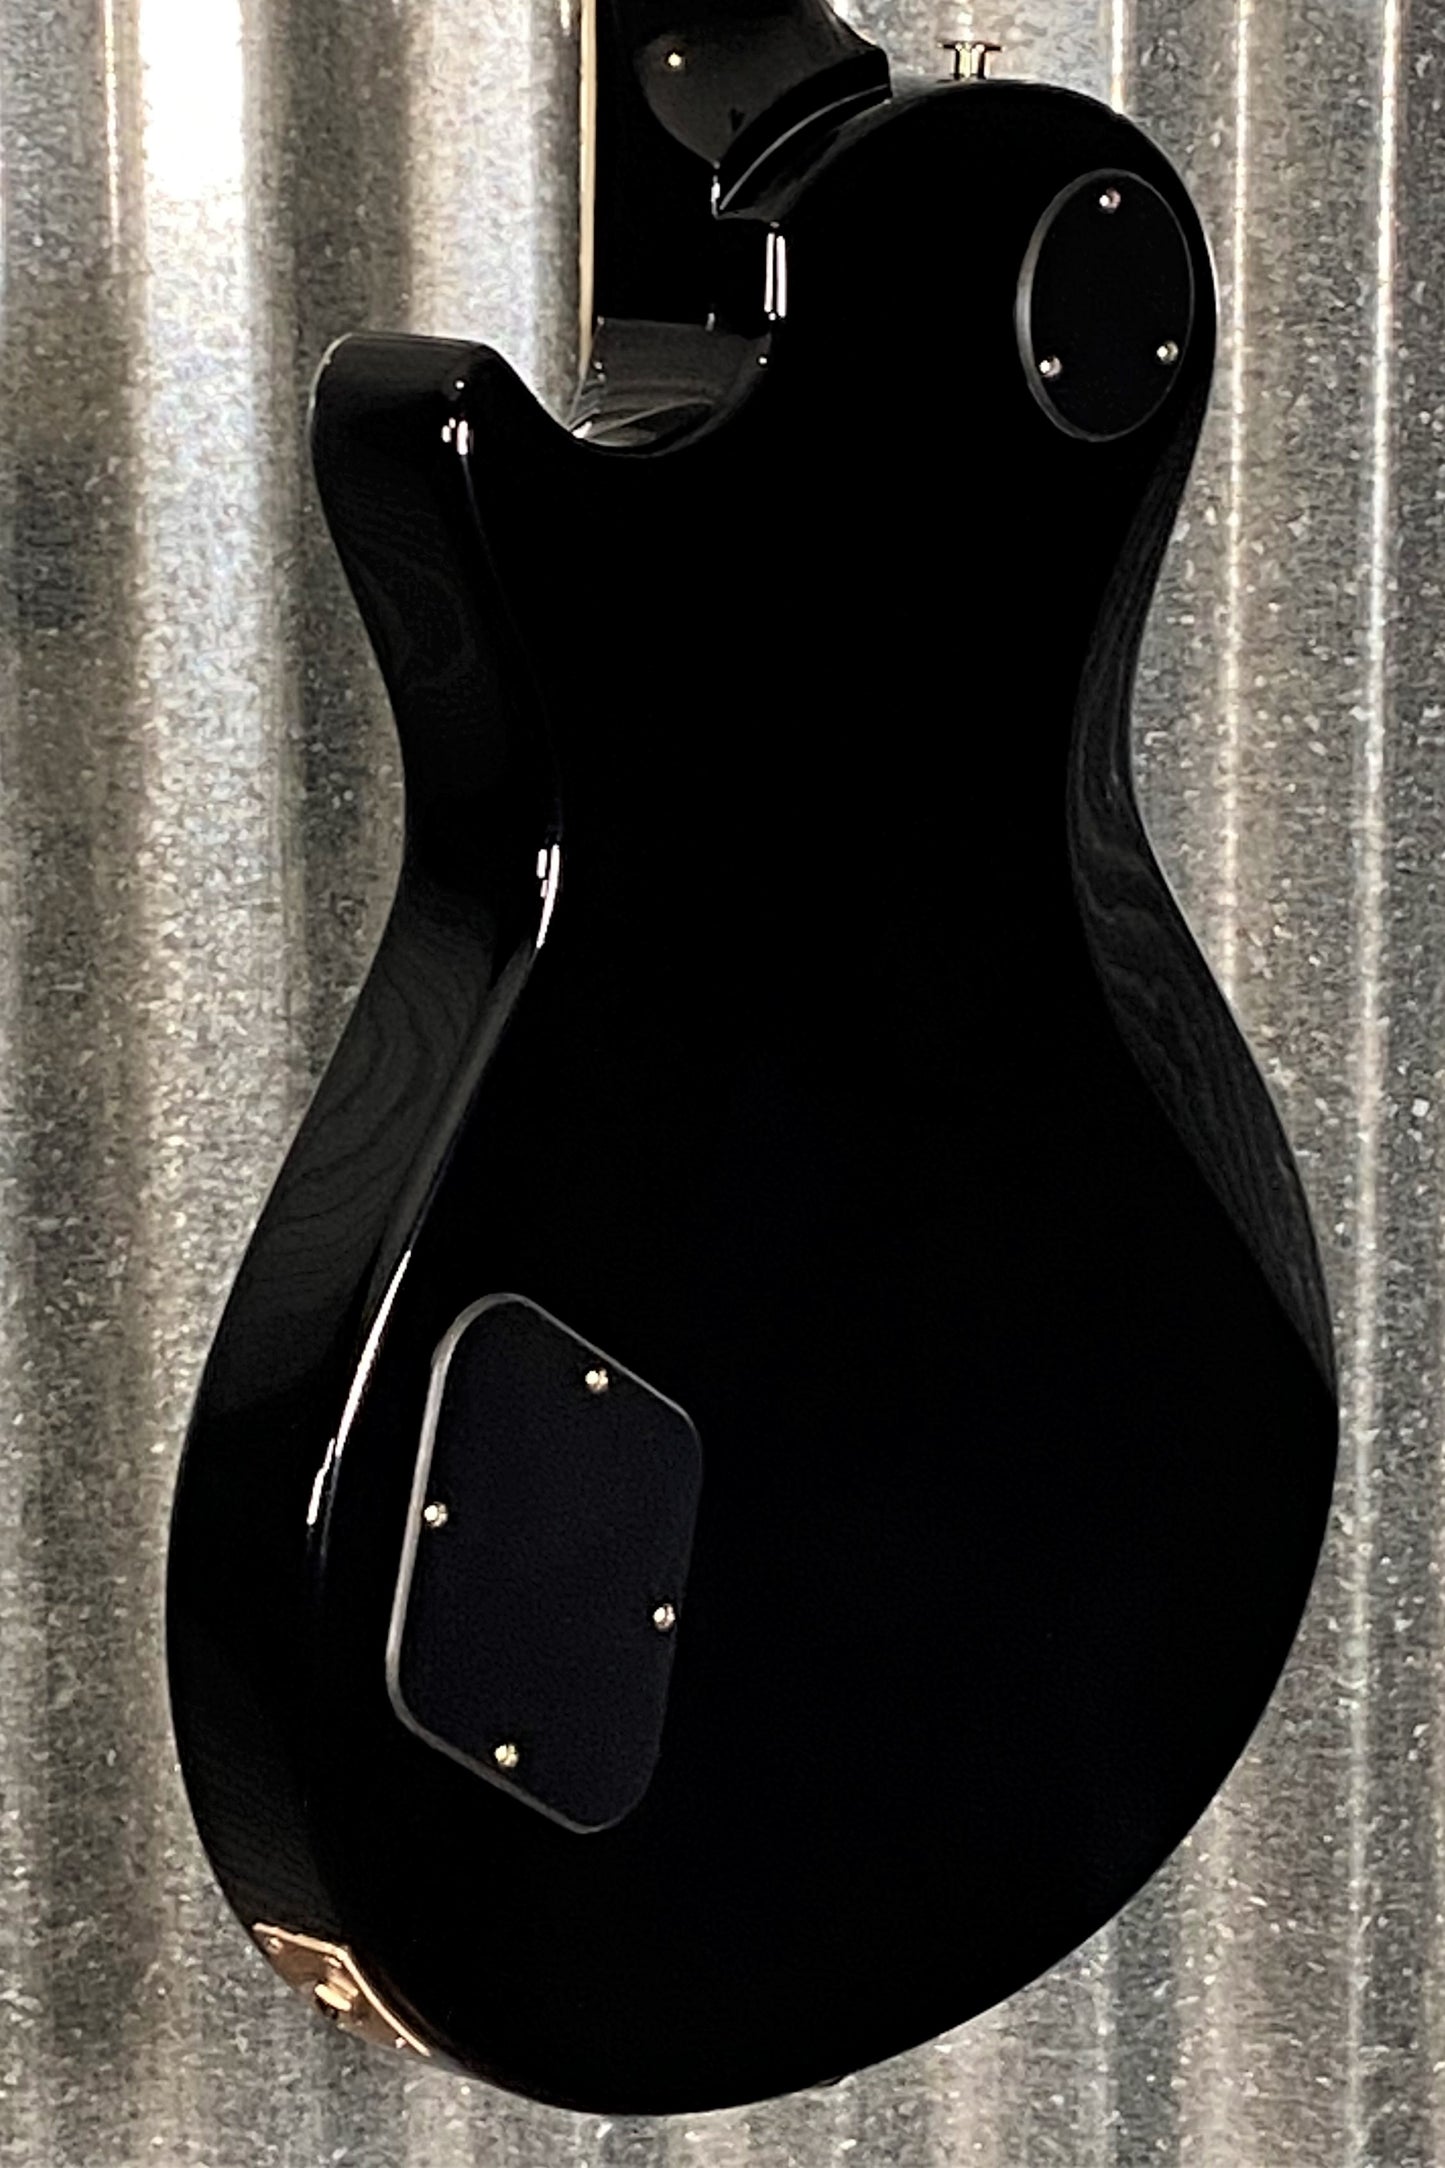 PRS Paul Reed Smith USA S2 Singlecut McCarty 594 Dark Blue Blackburst Guitar & Bag #2665 Demo